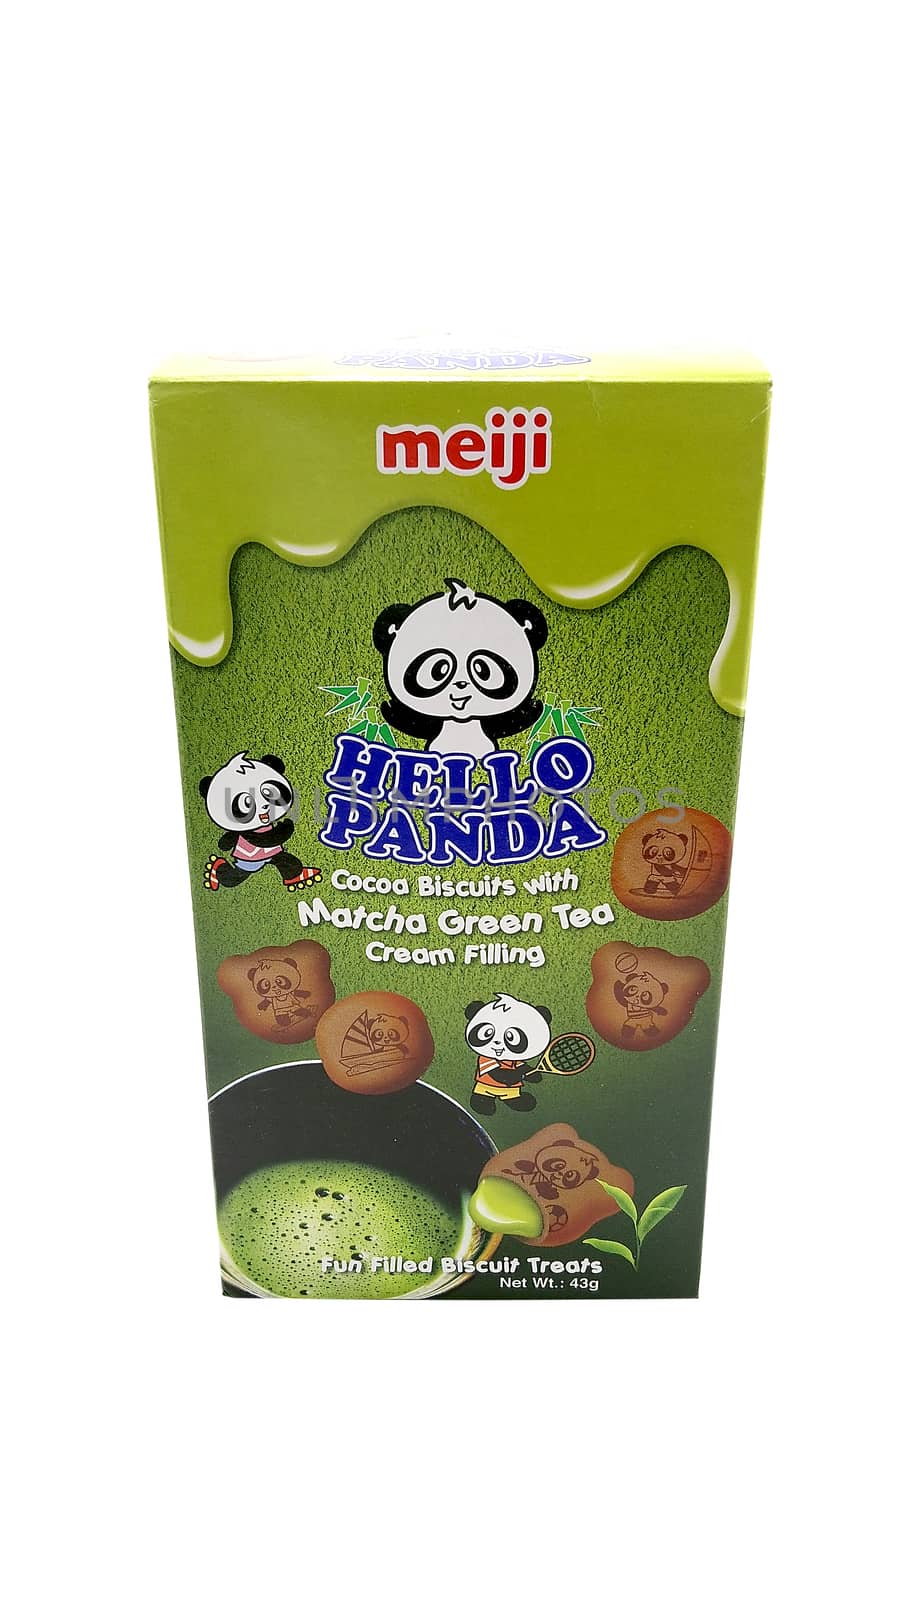 MANILA, PH - JUNE 23 - Meiji hello panda cocoa biscuits with matcha green tea cream filling on June 23, 2020 in Manila, Philippines.